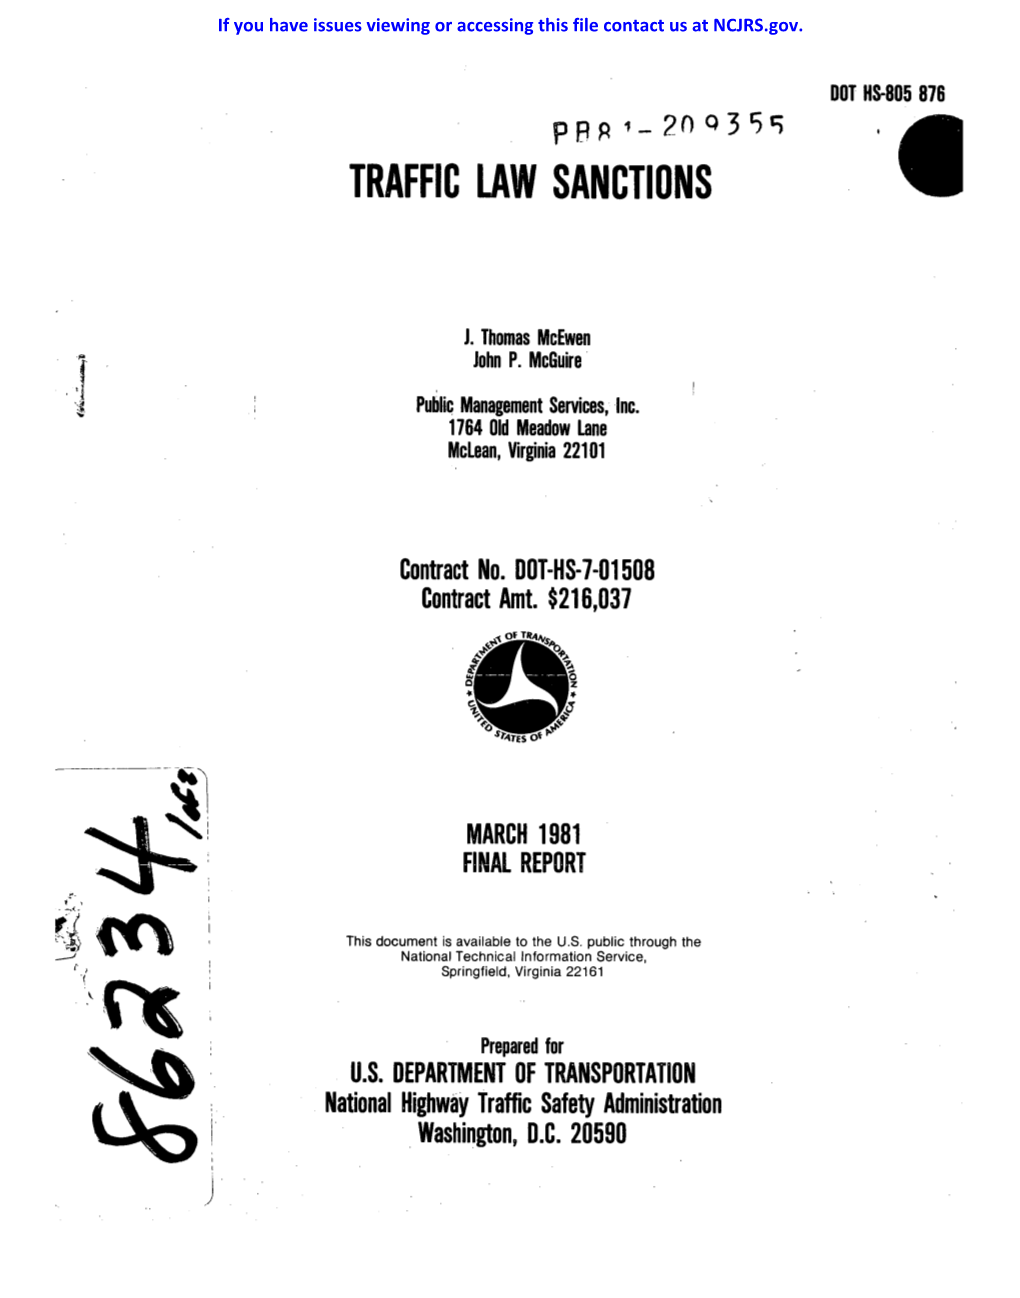 Traffic Law Sanctions